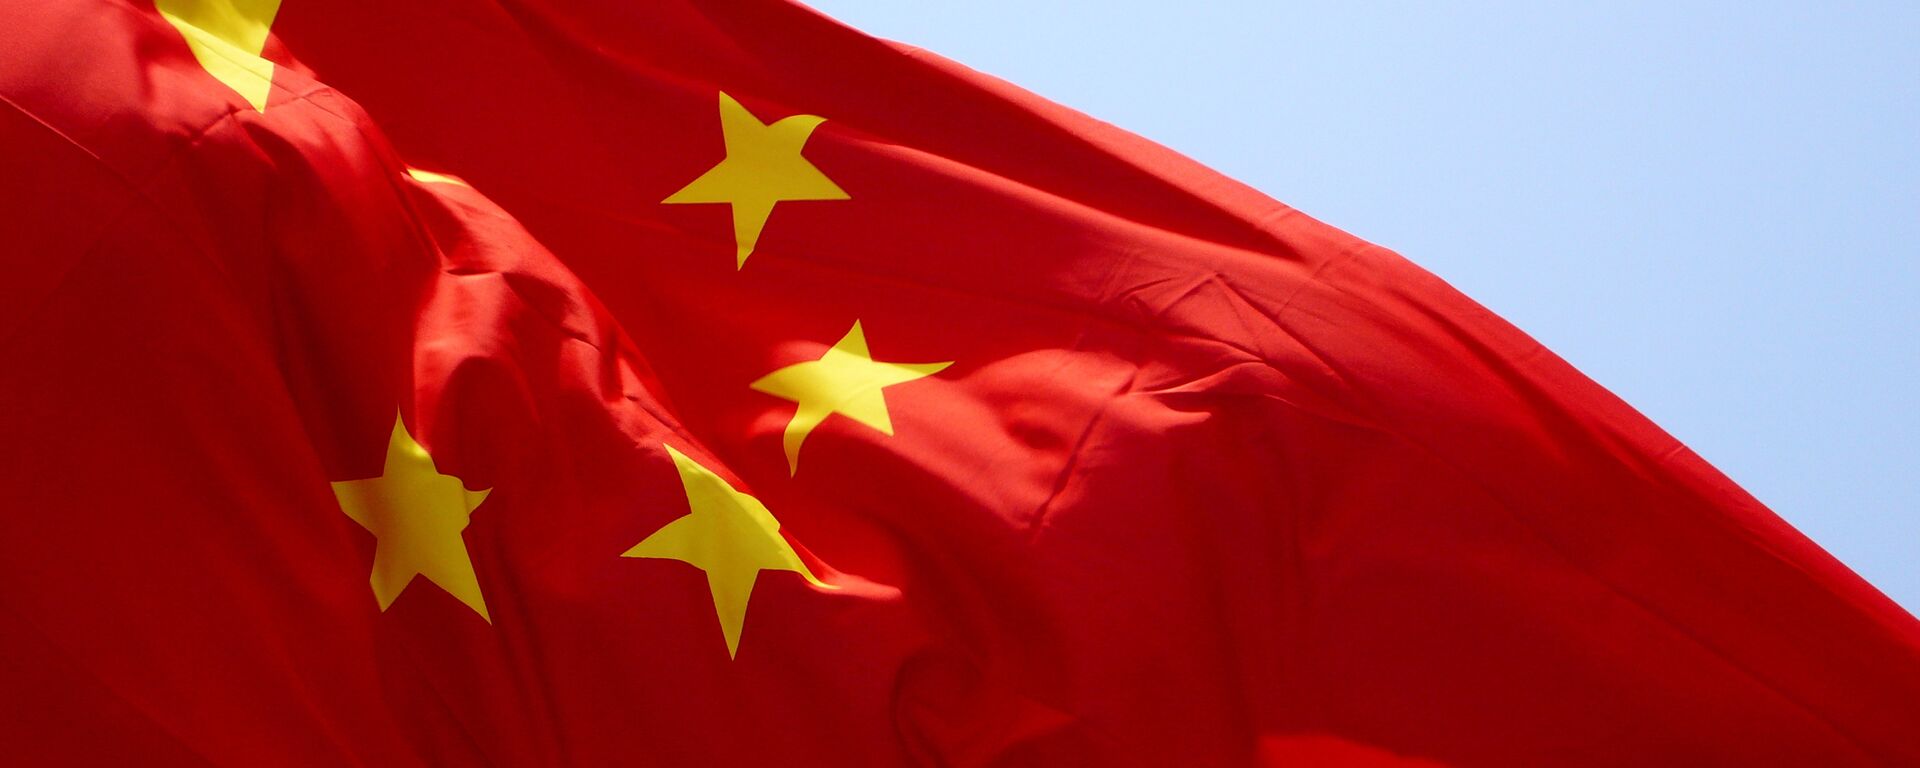 Bandera de China - Sputnik Mundo, 1920, 19.02.2021